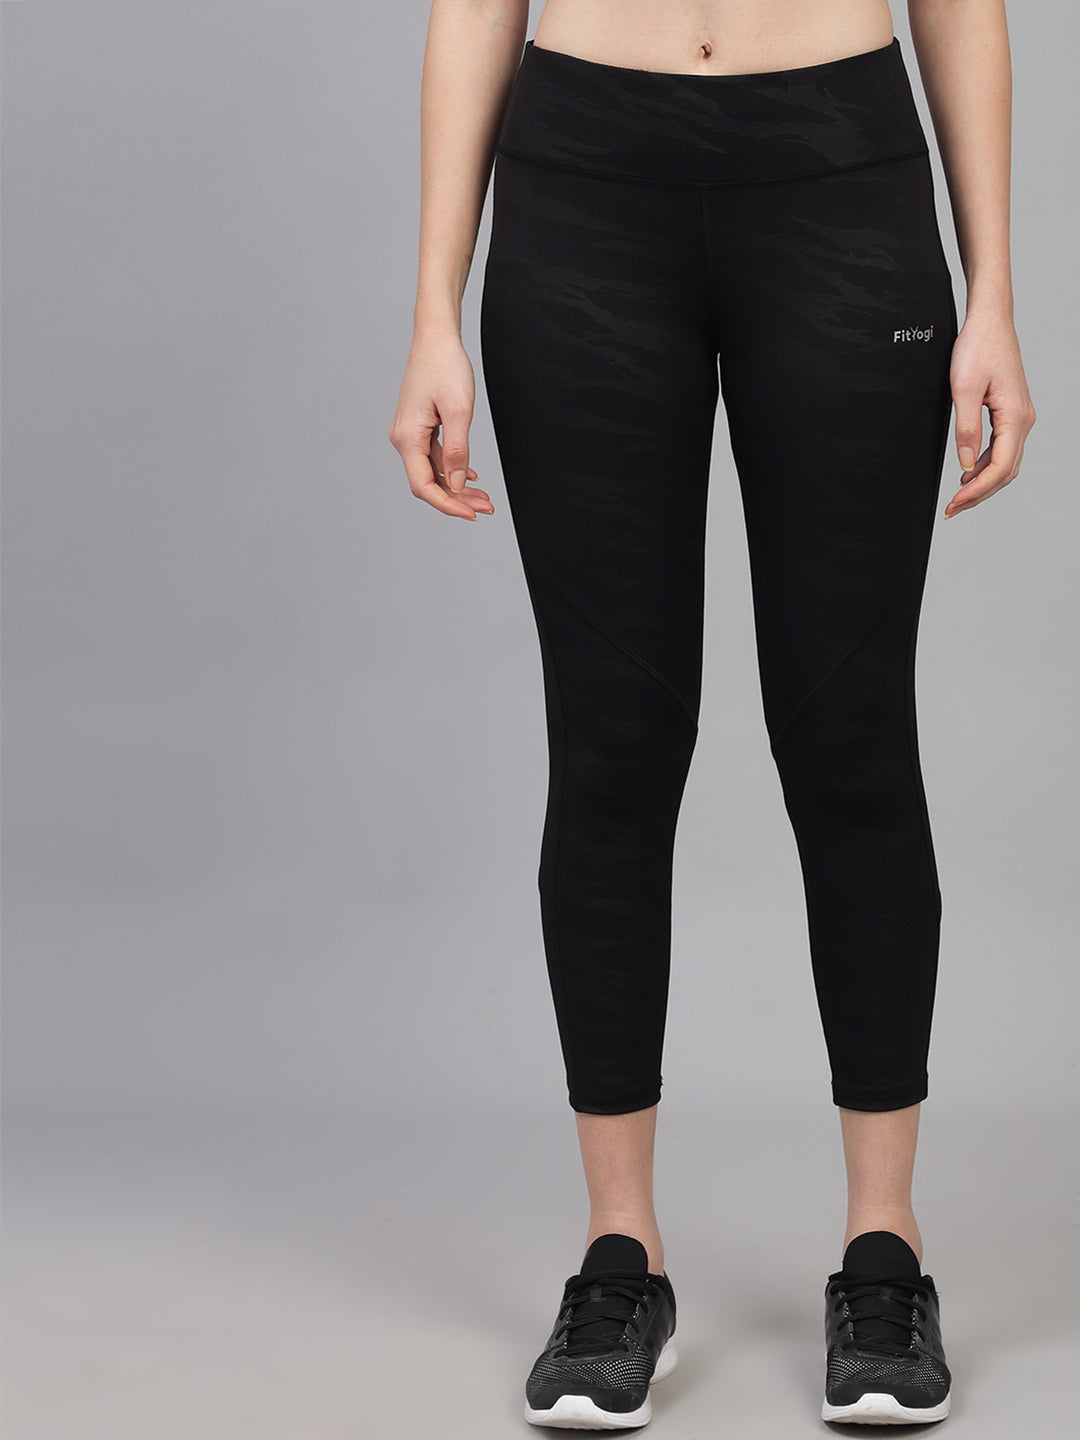 Black Camouflage High Waist Gym Wear/Yoga Wear Ankle Length Leggings